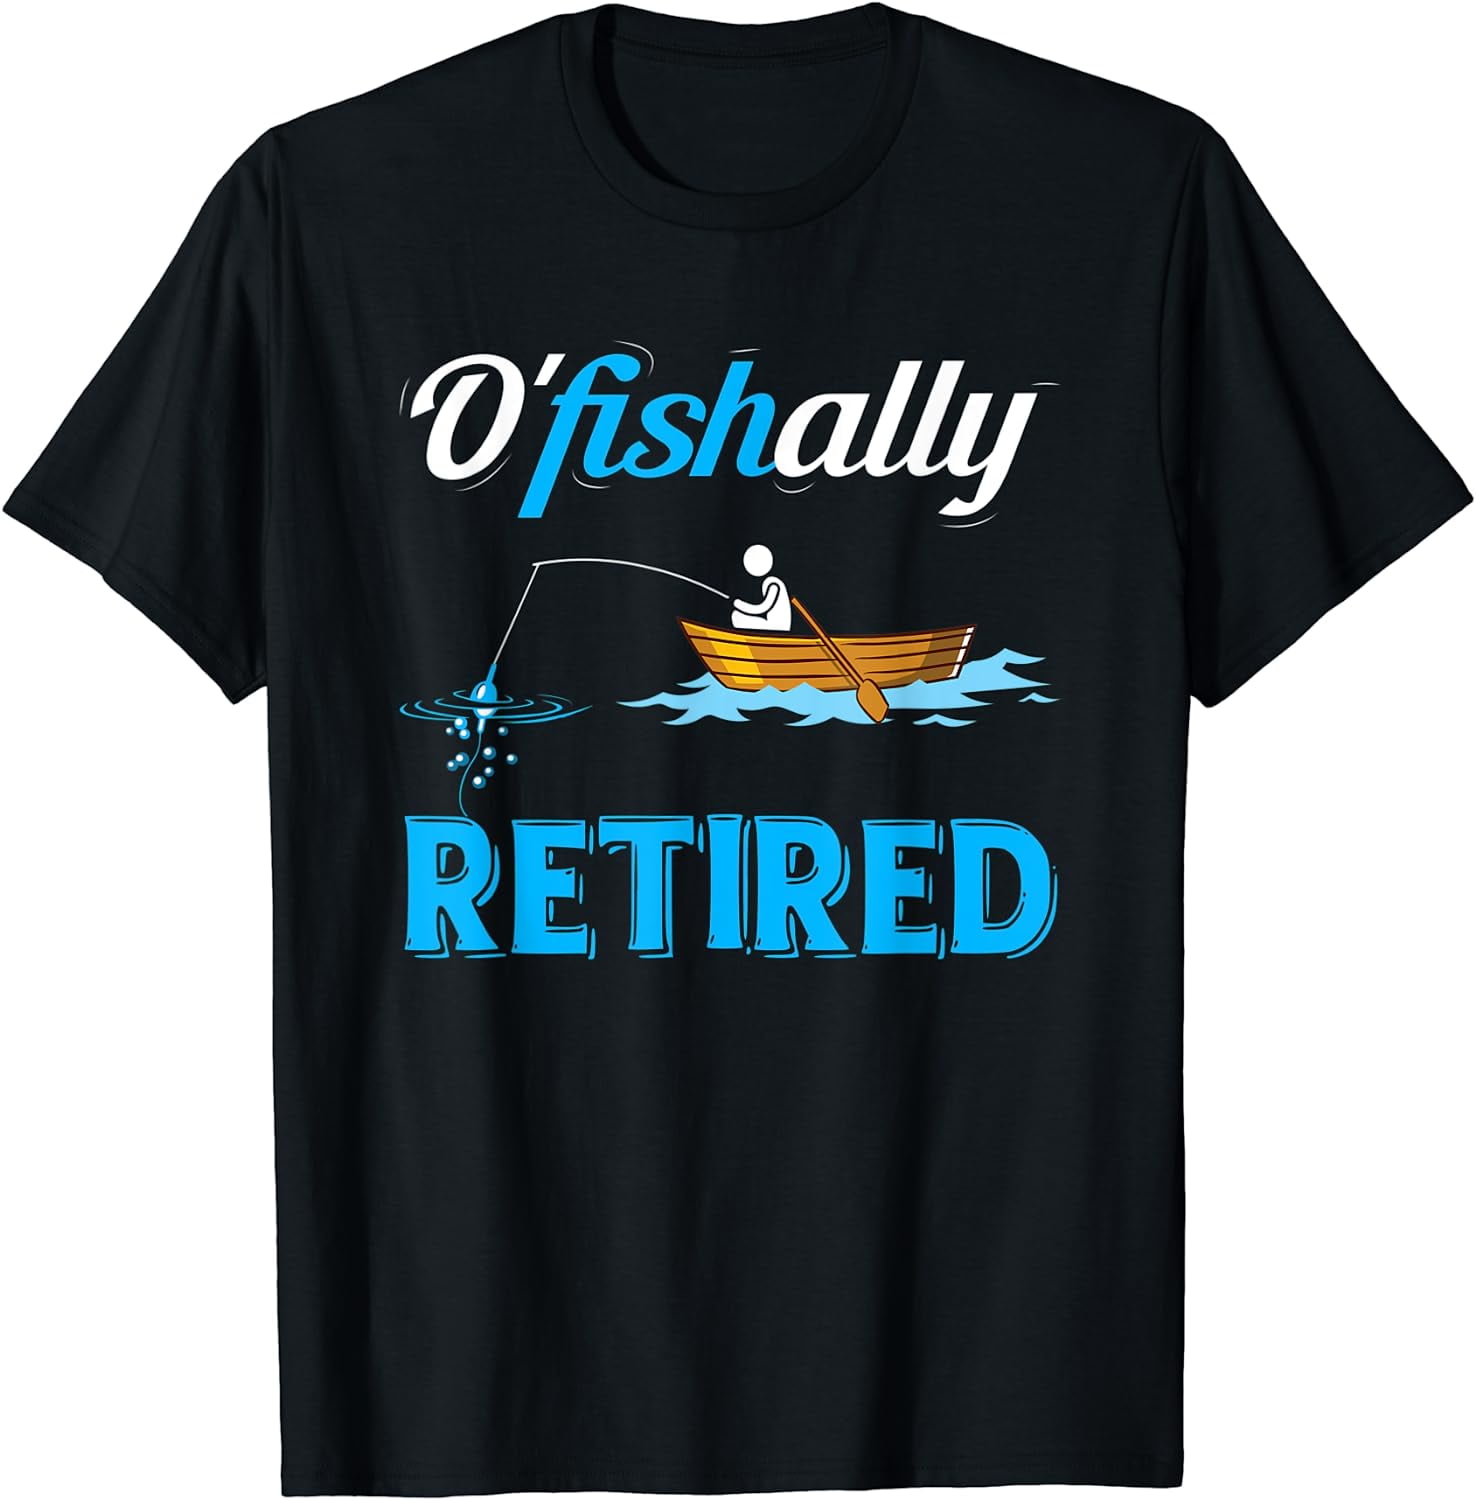 OFishally Retired T-Shirt Funny Fisherman Retirement Gift 